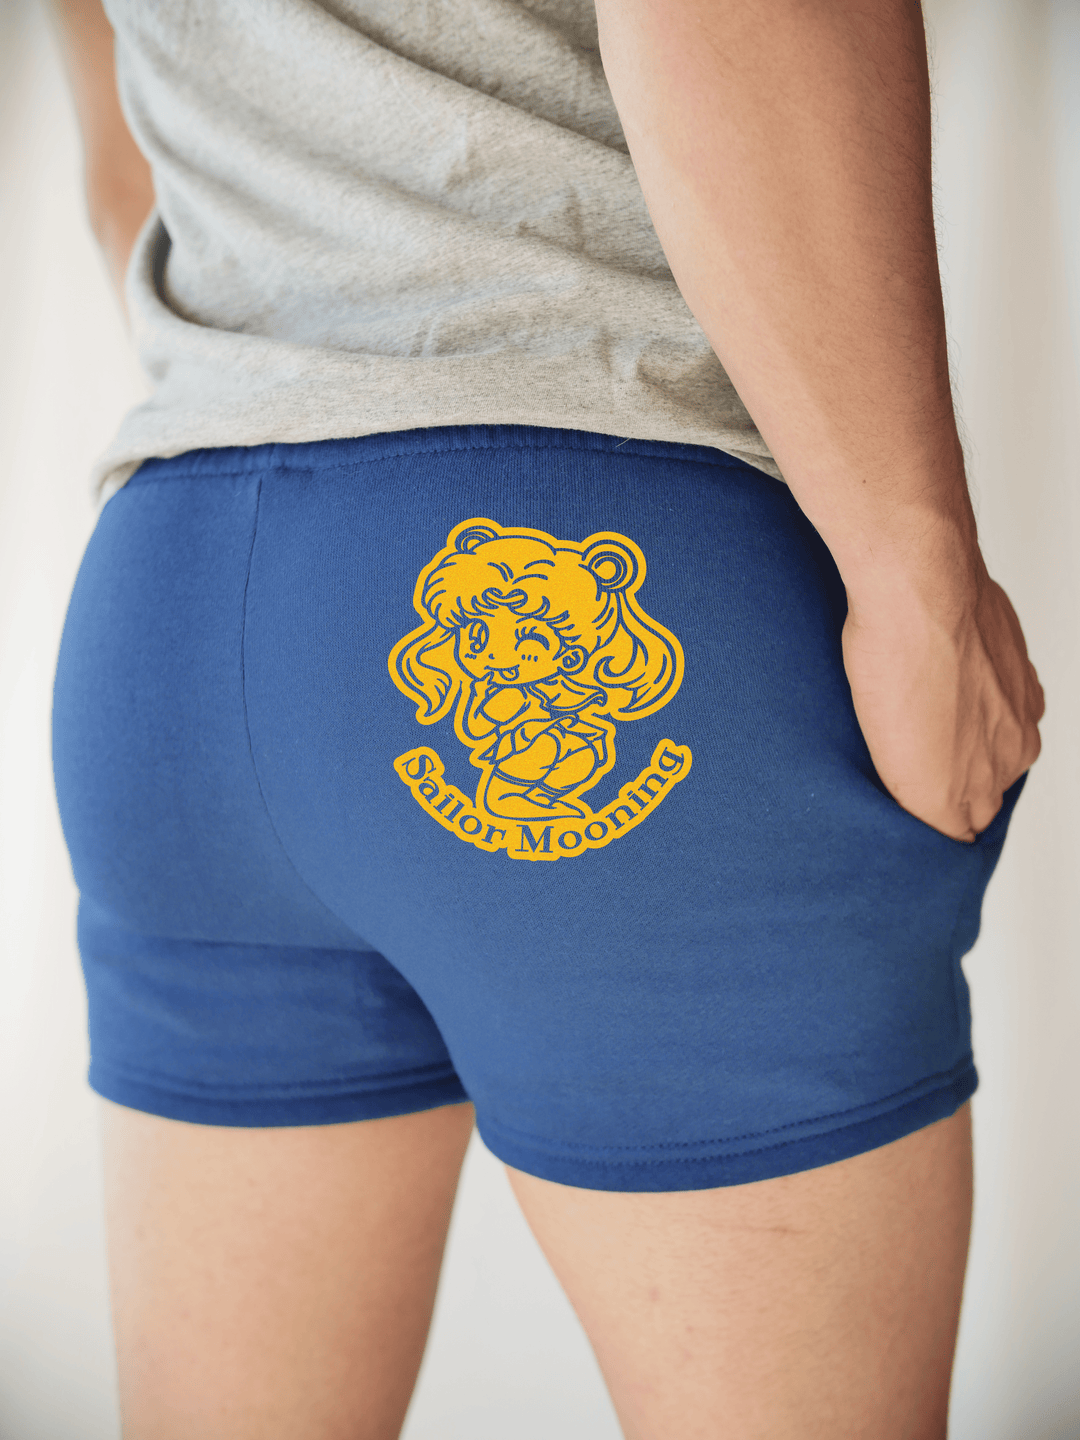 PixelThat Punderwear Shorts Royal Blue / S / Back Sailor Mooning Men's Gym Shorts